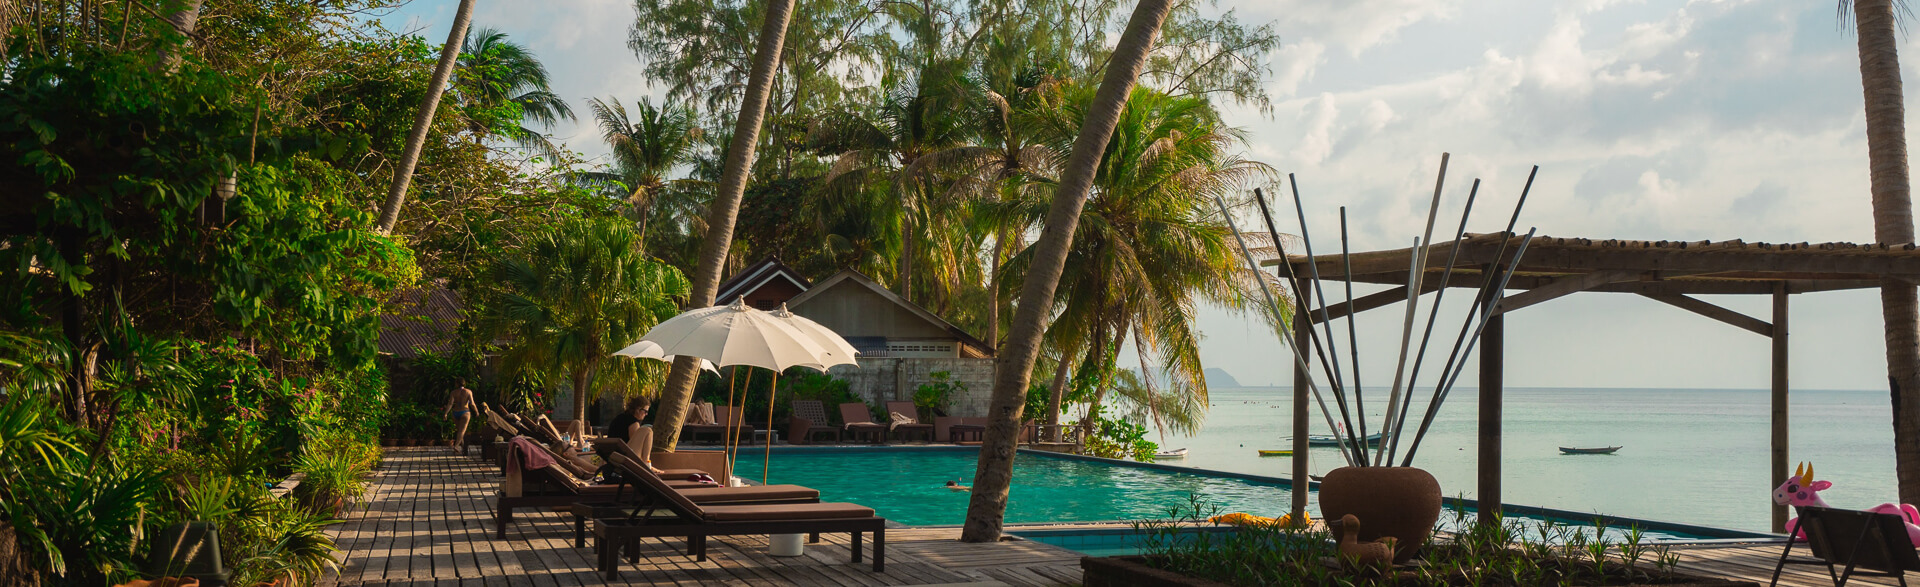 11 BEST Aitutaki Resorts & Accommodation in 2022